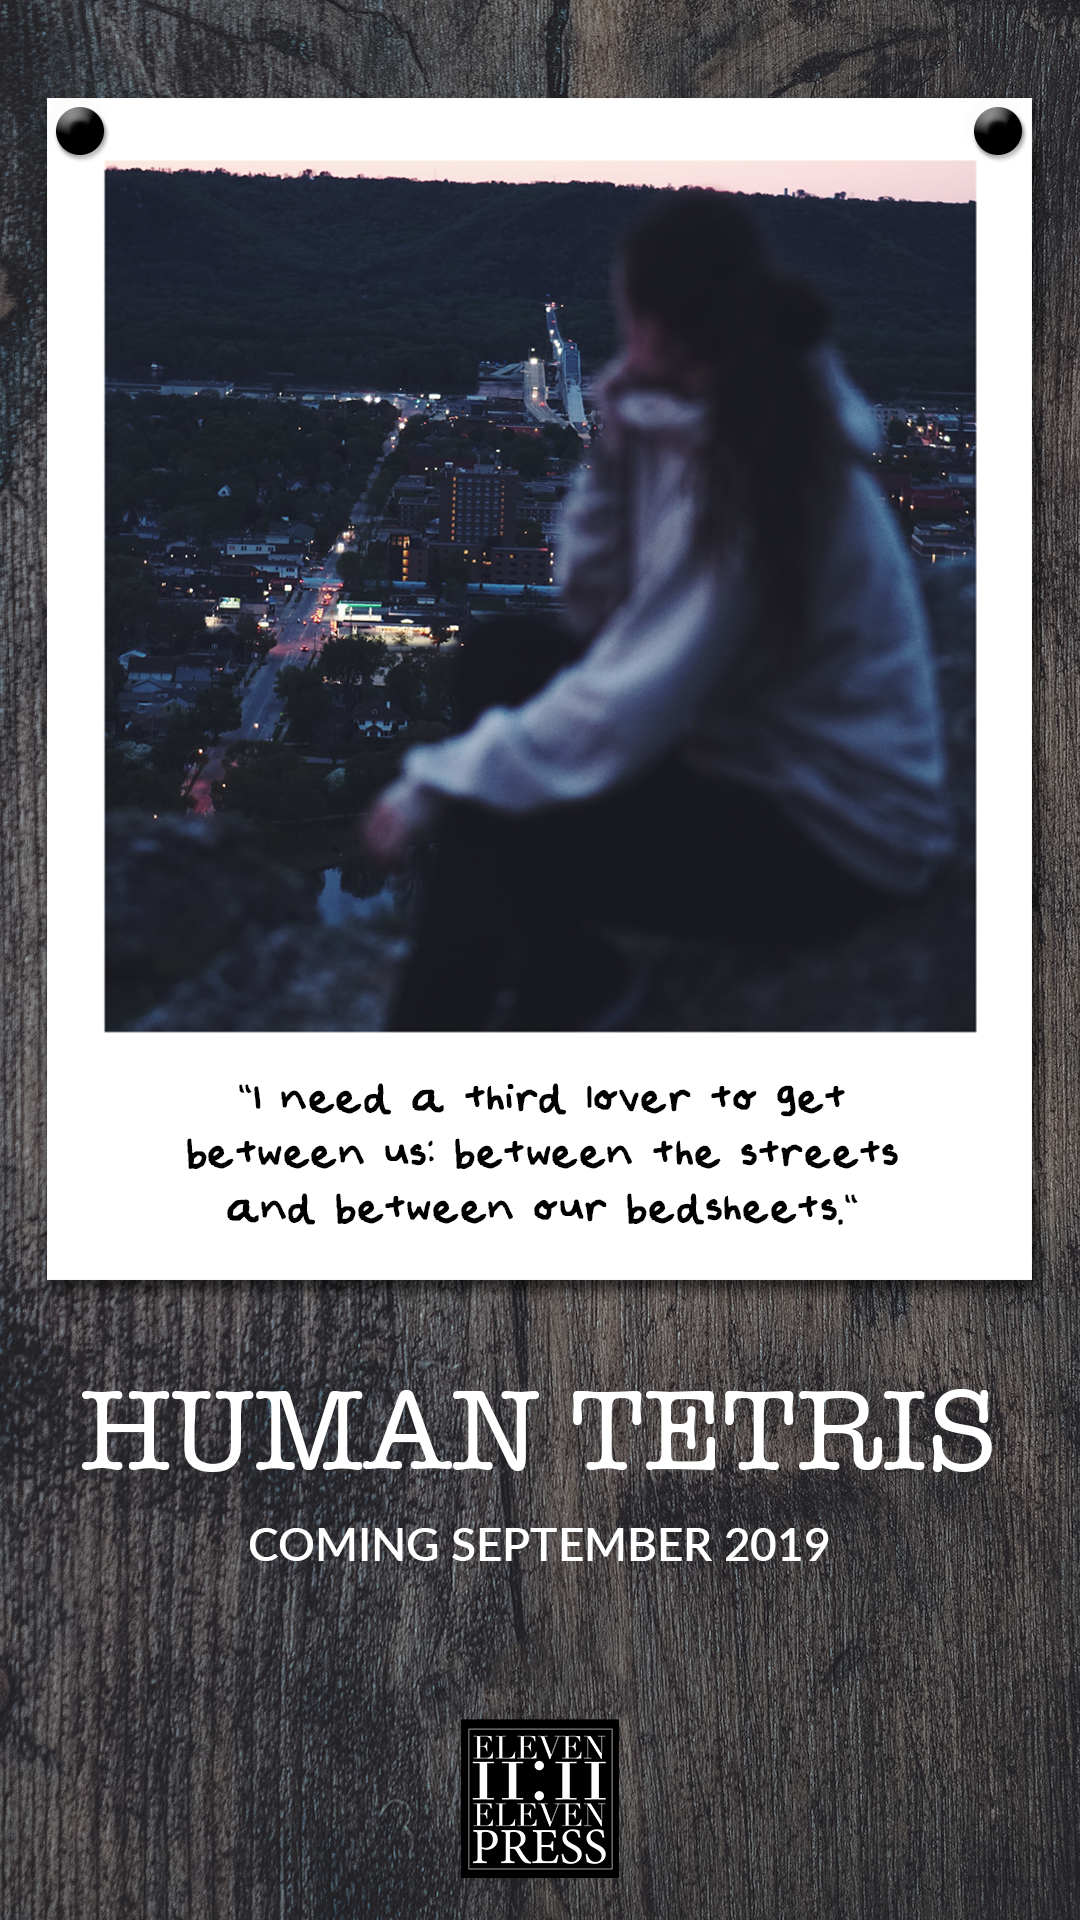 Human_Tetris_Story_Ad_1.png